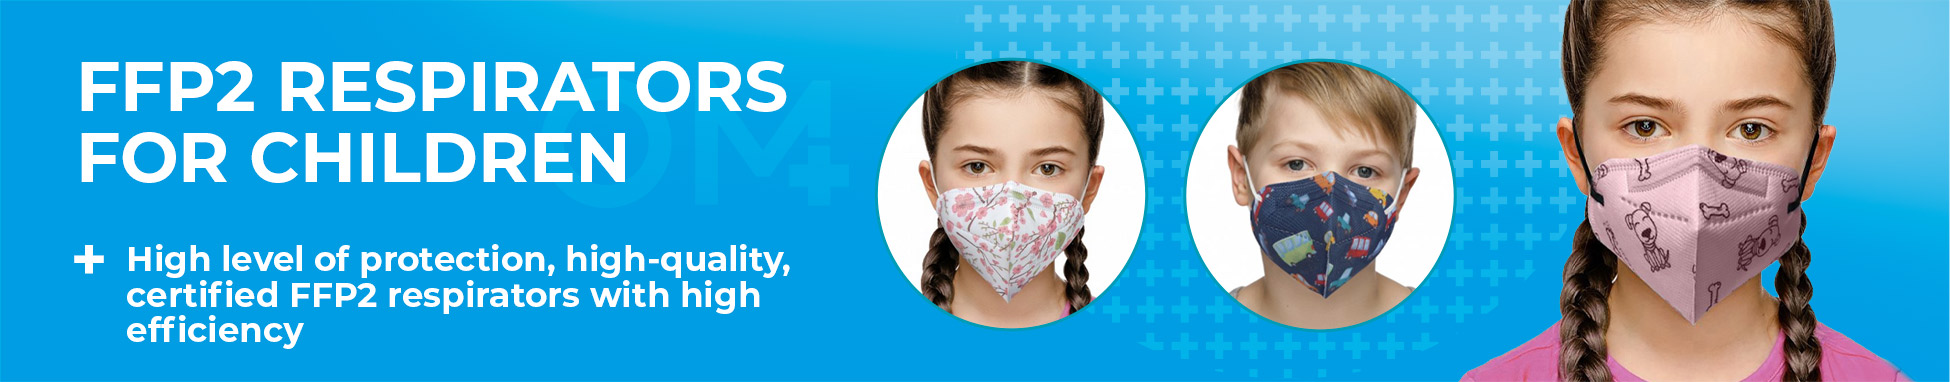 EN-kategorie-respiratory-deti